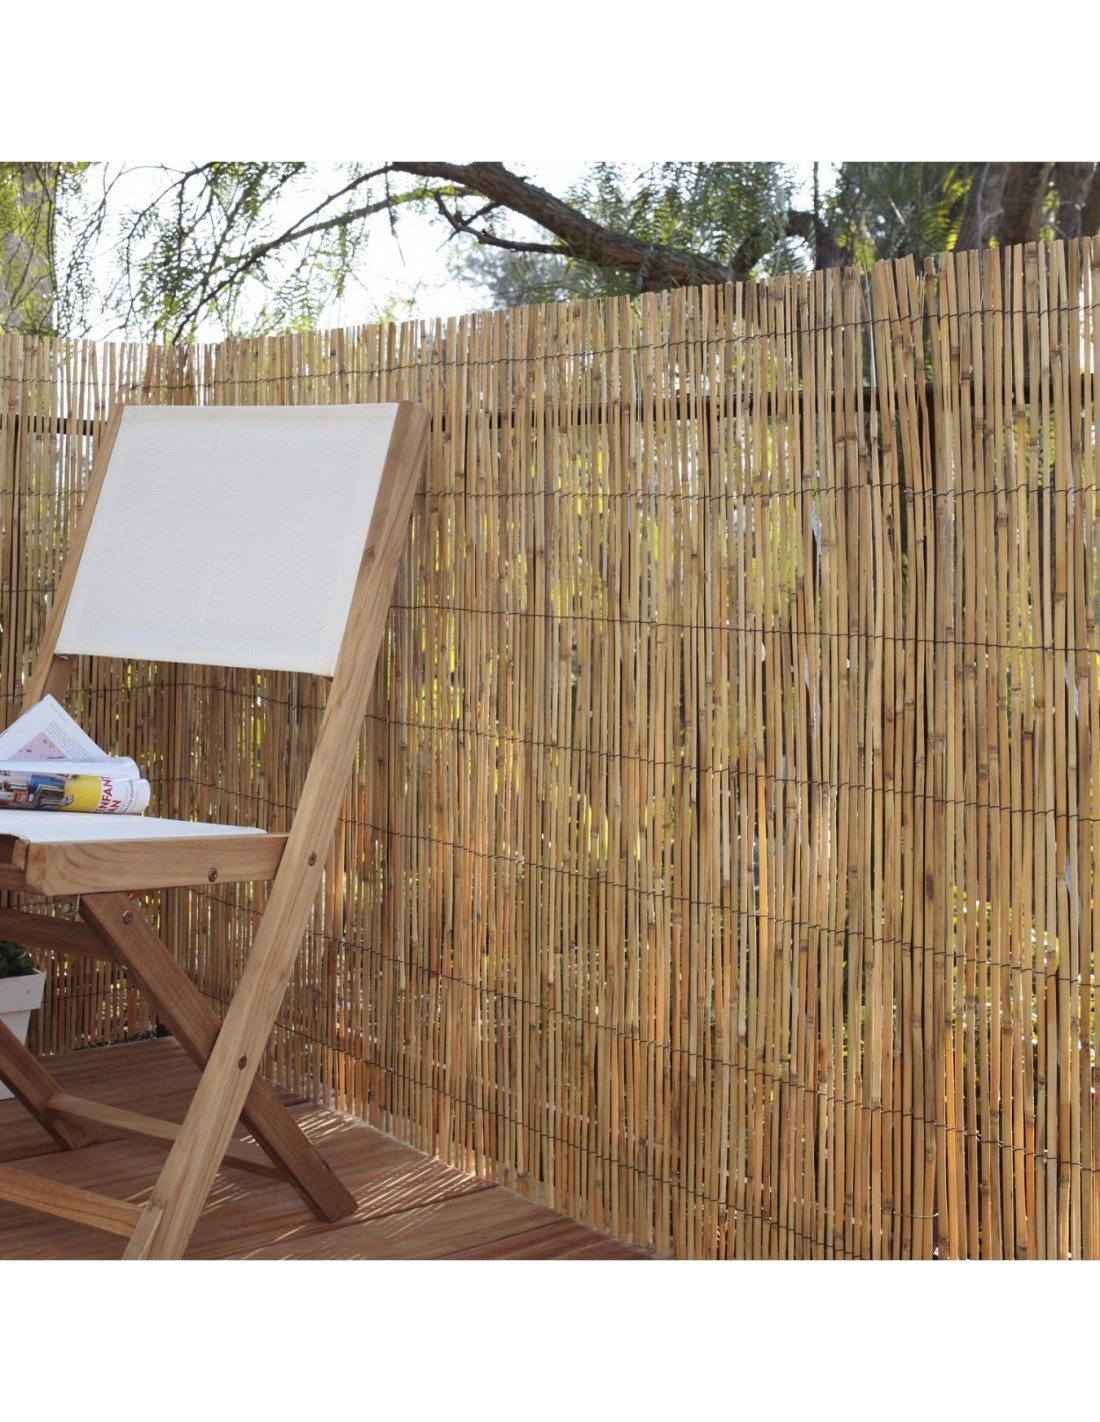 Canisse de jardin en bambou naturel fendu 500 x 200 cm